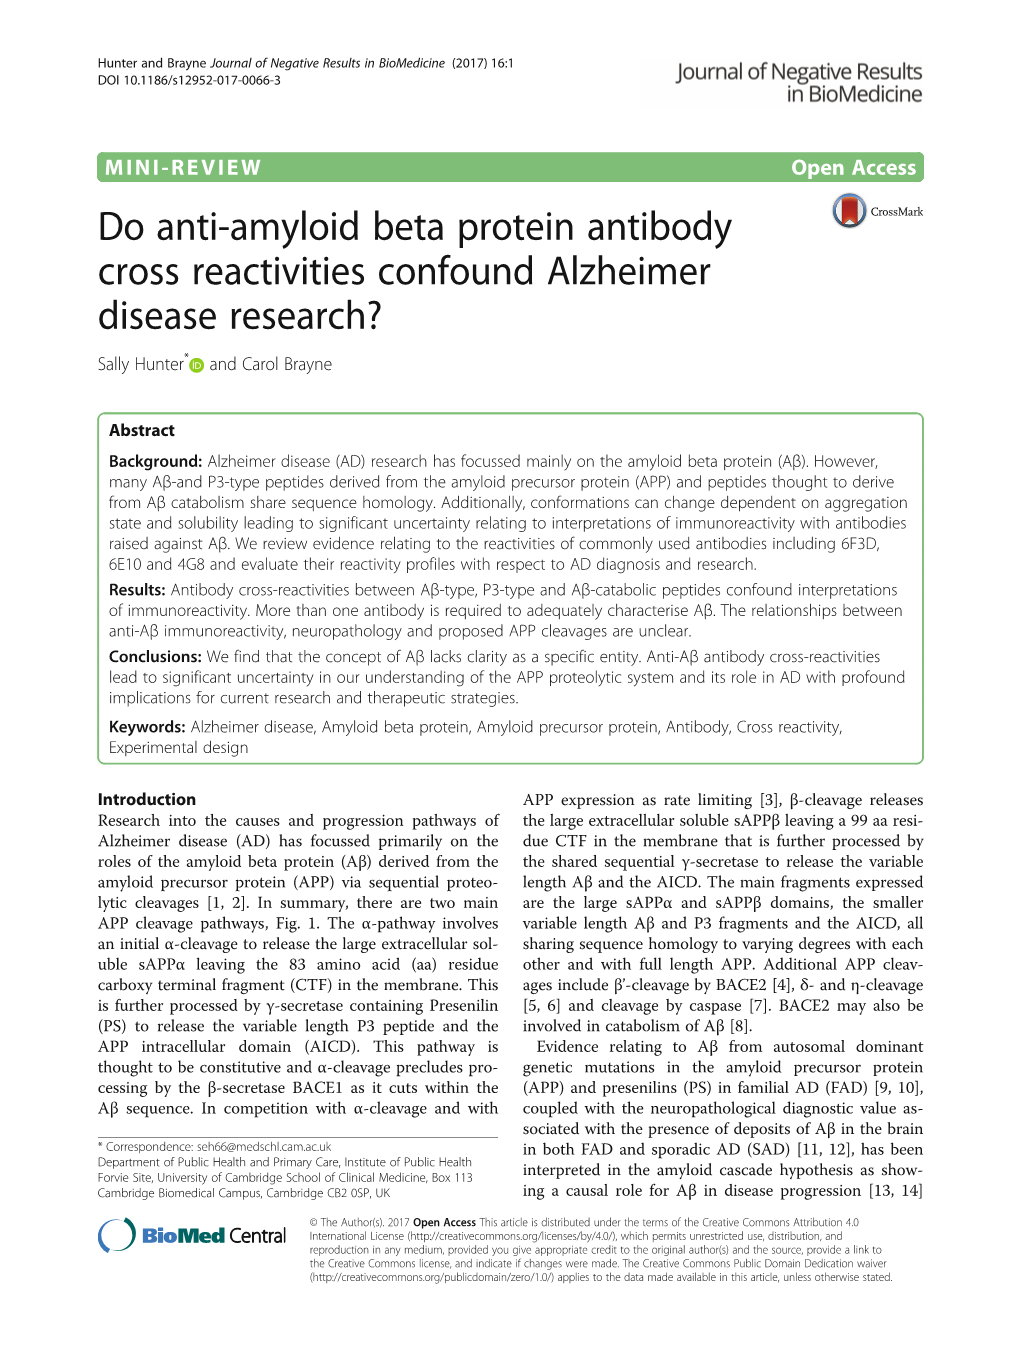 Do Anti-Amyloid Beta Protein Antibody Cross Reactivities Confound Alzheimer Disease Research? Sally Hunter* and Carol Brayne